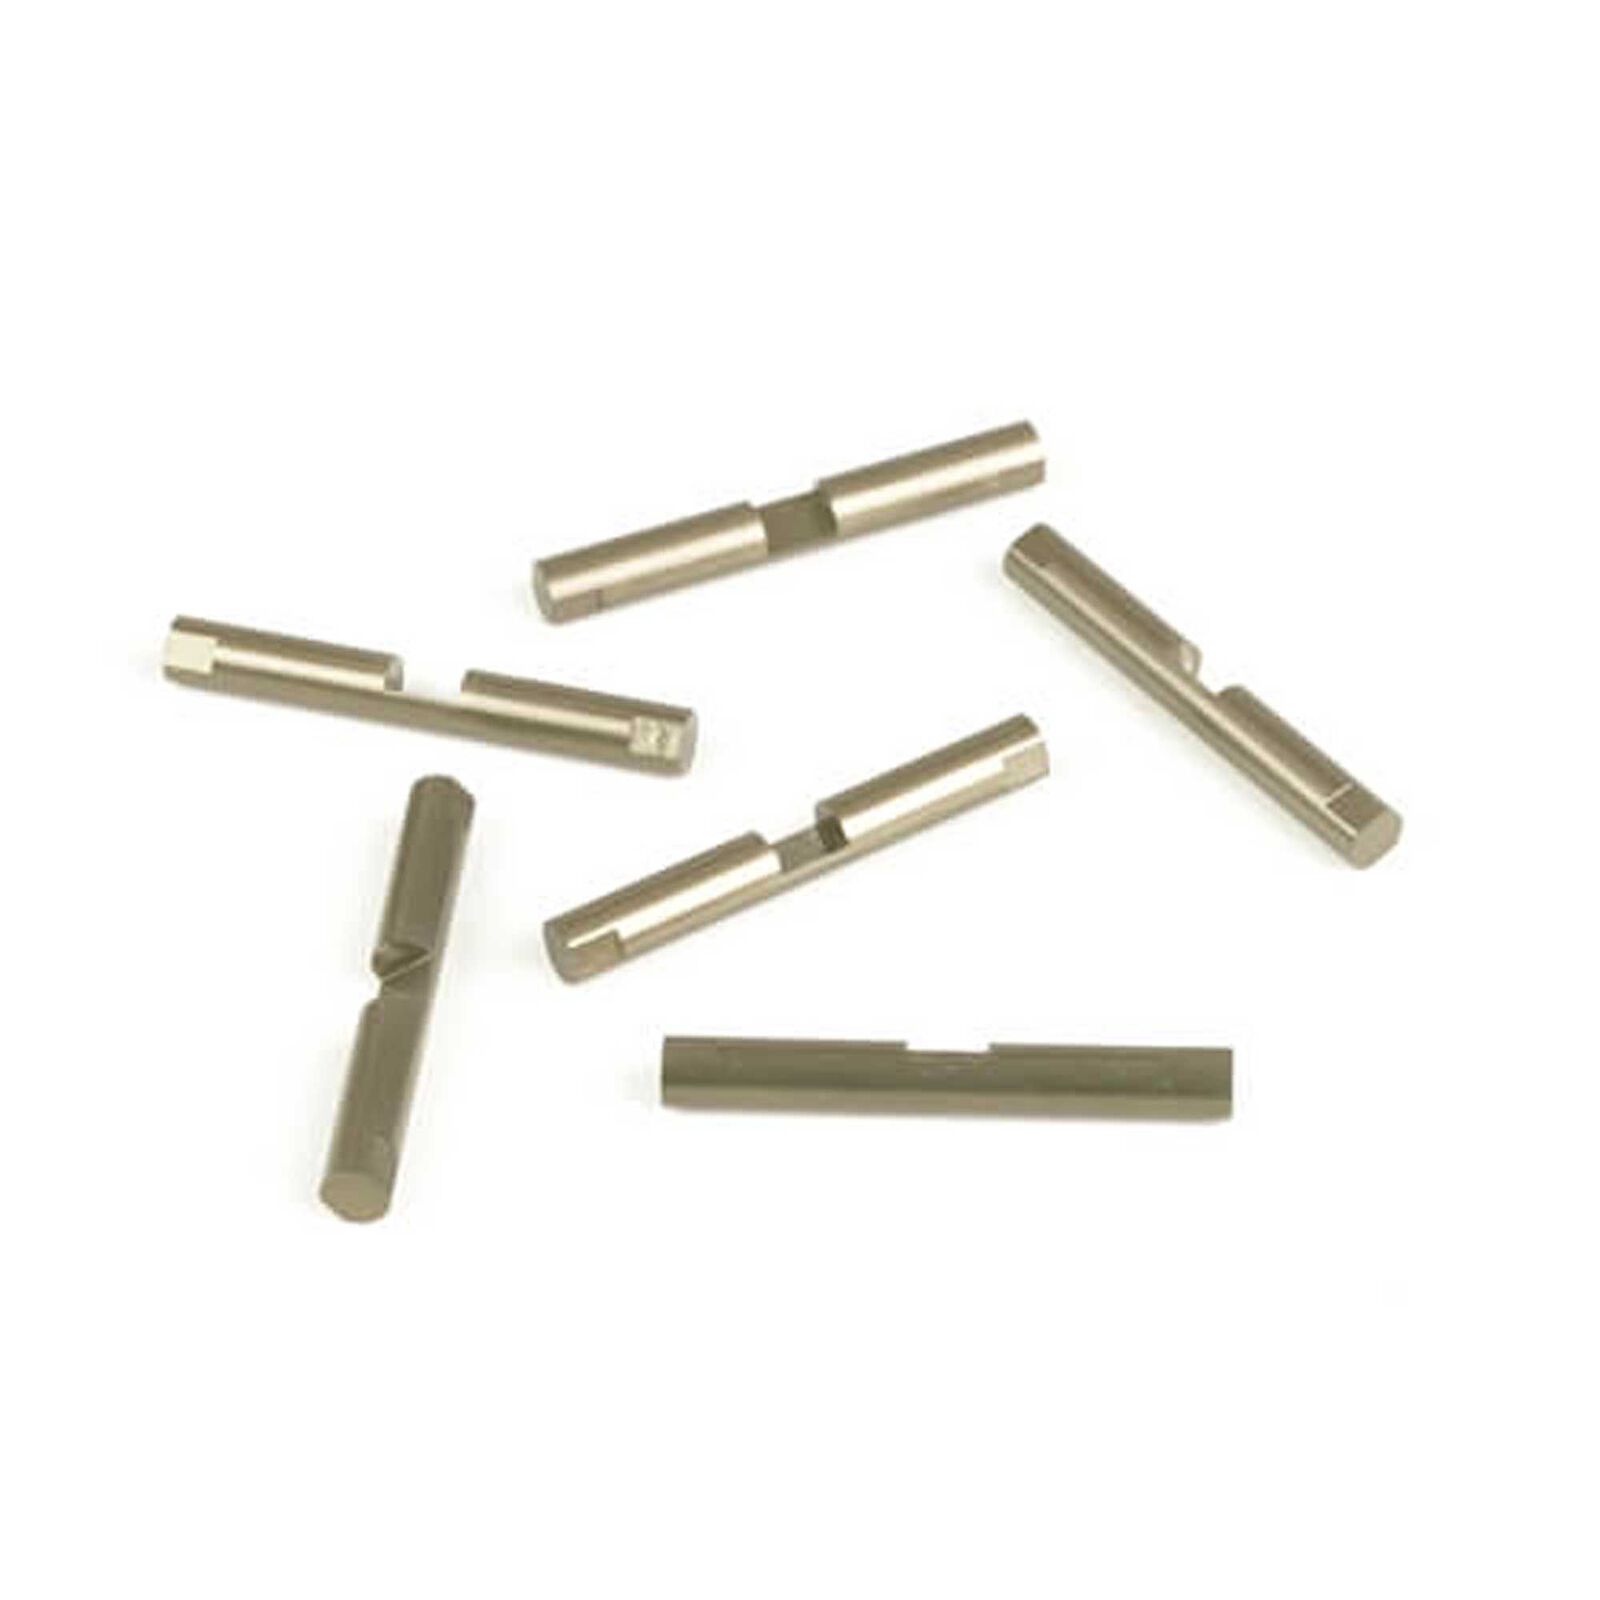 2.0 Differential Cross Pins- 7075 Alum,6pcs